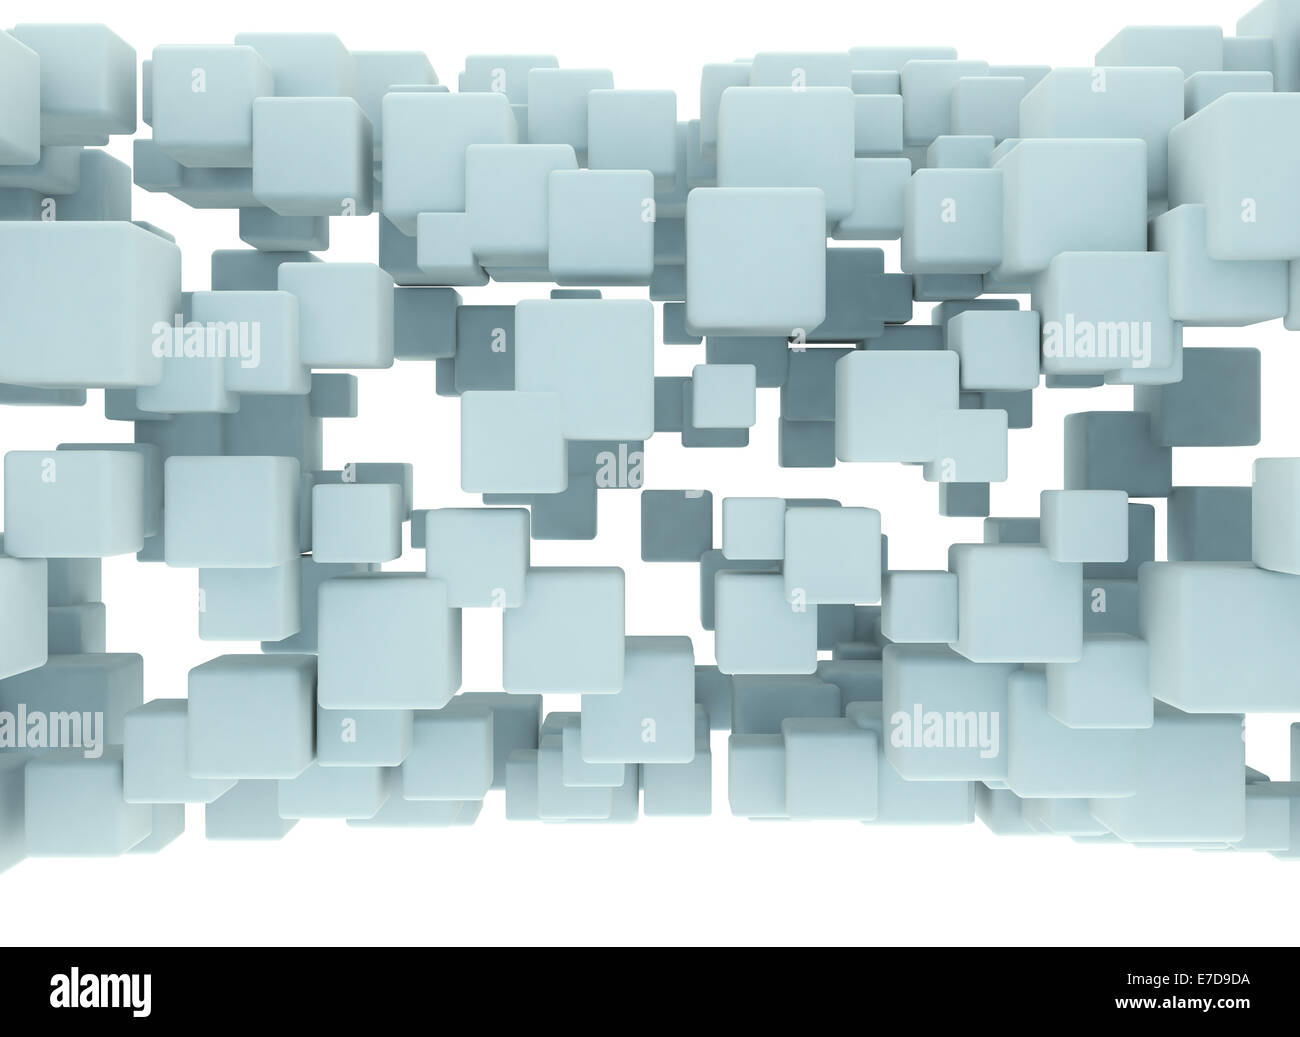 Digital cubes technology conceptual design background Stock Photo